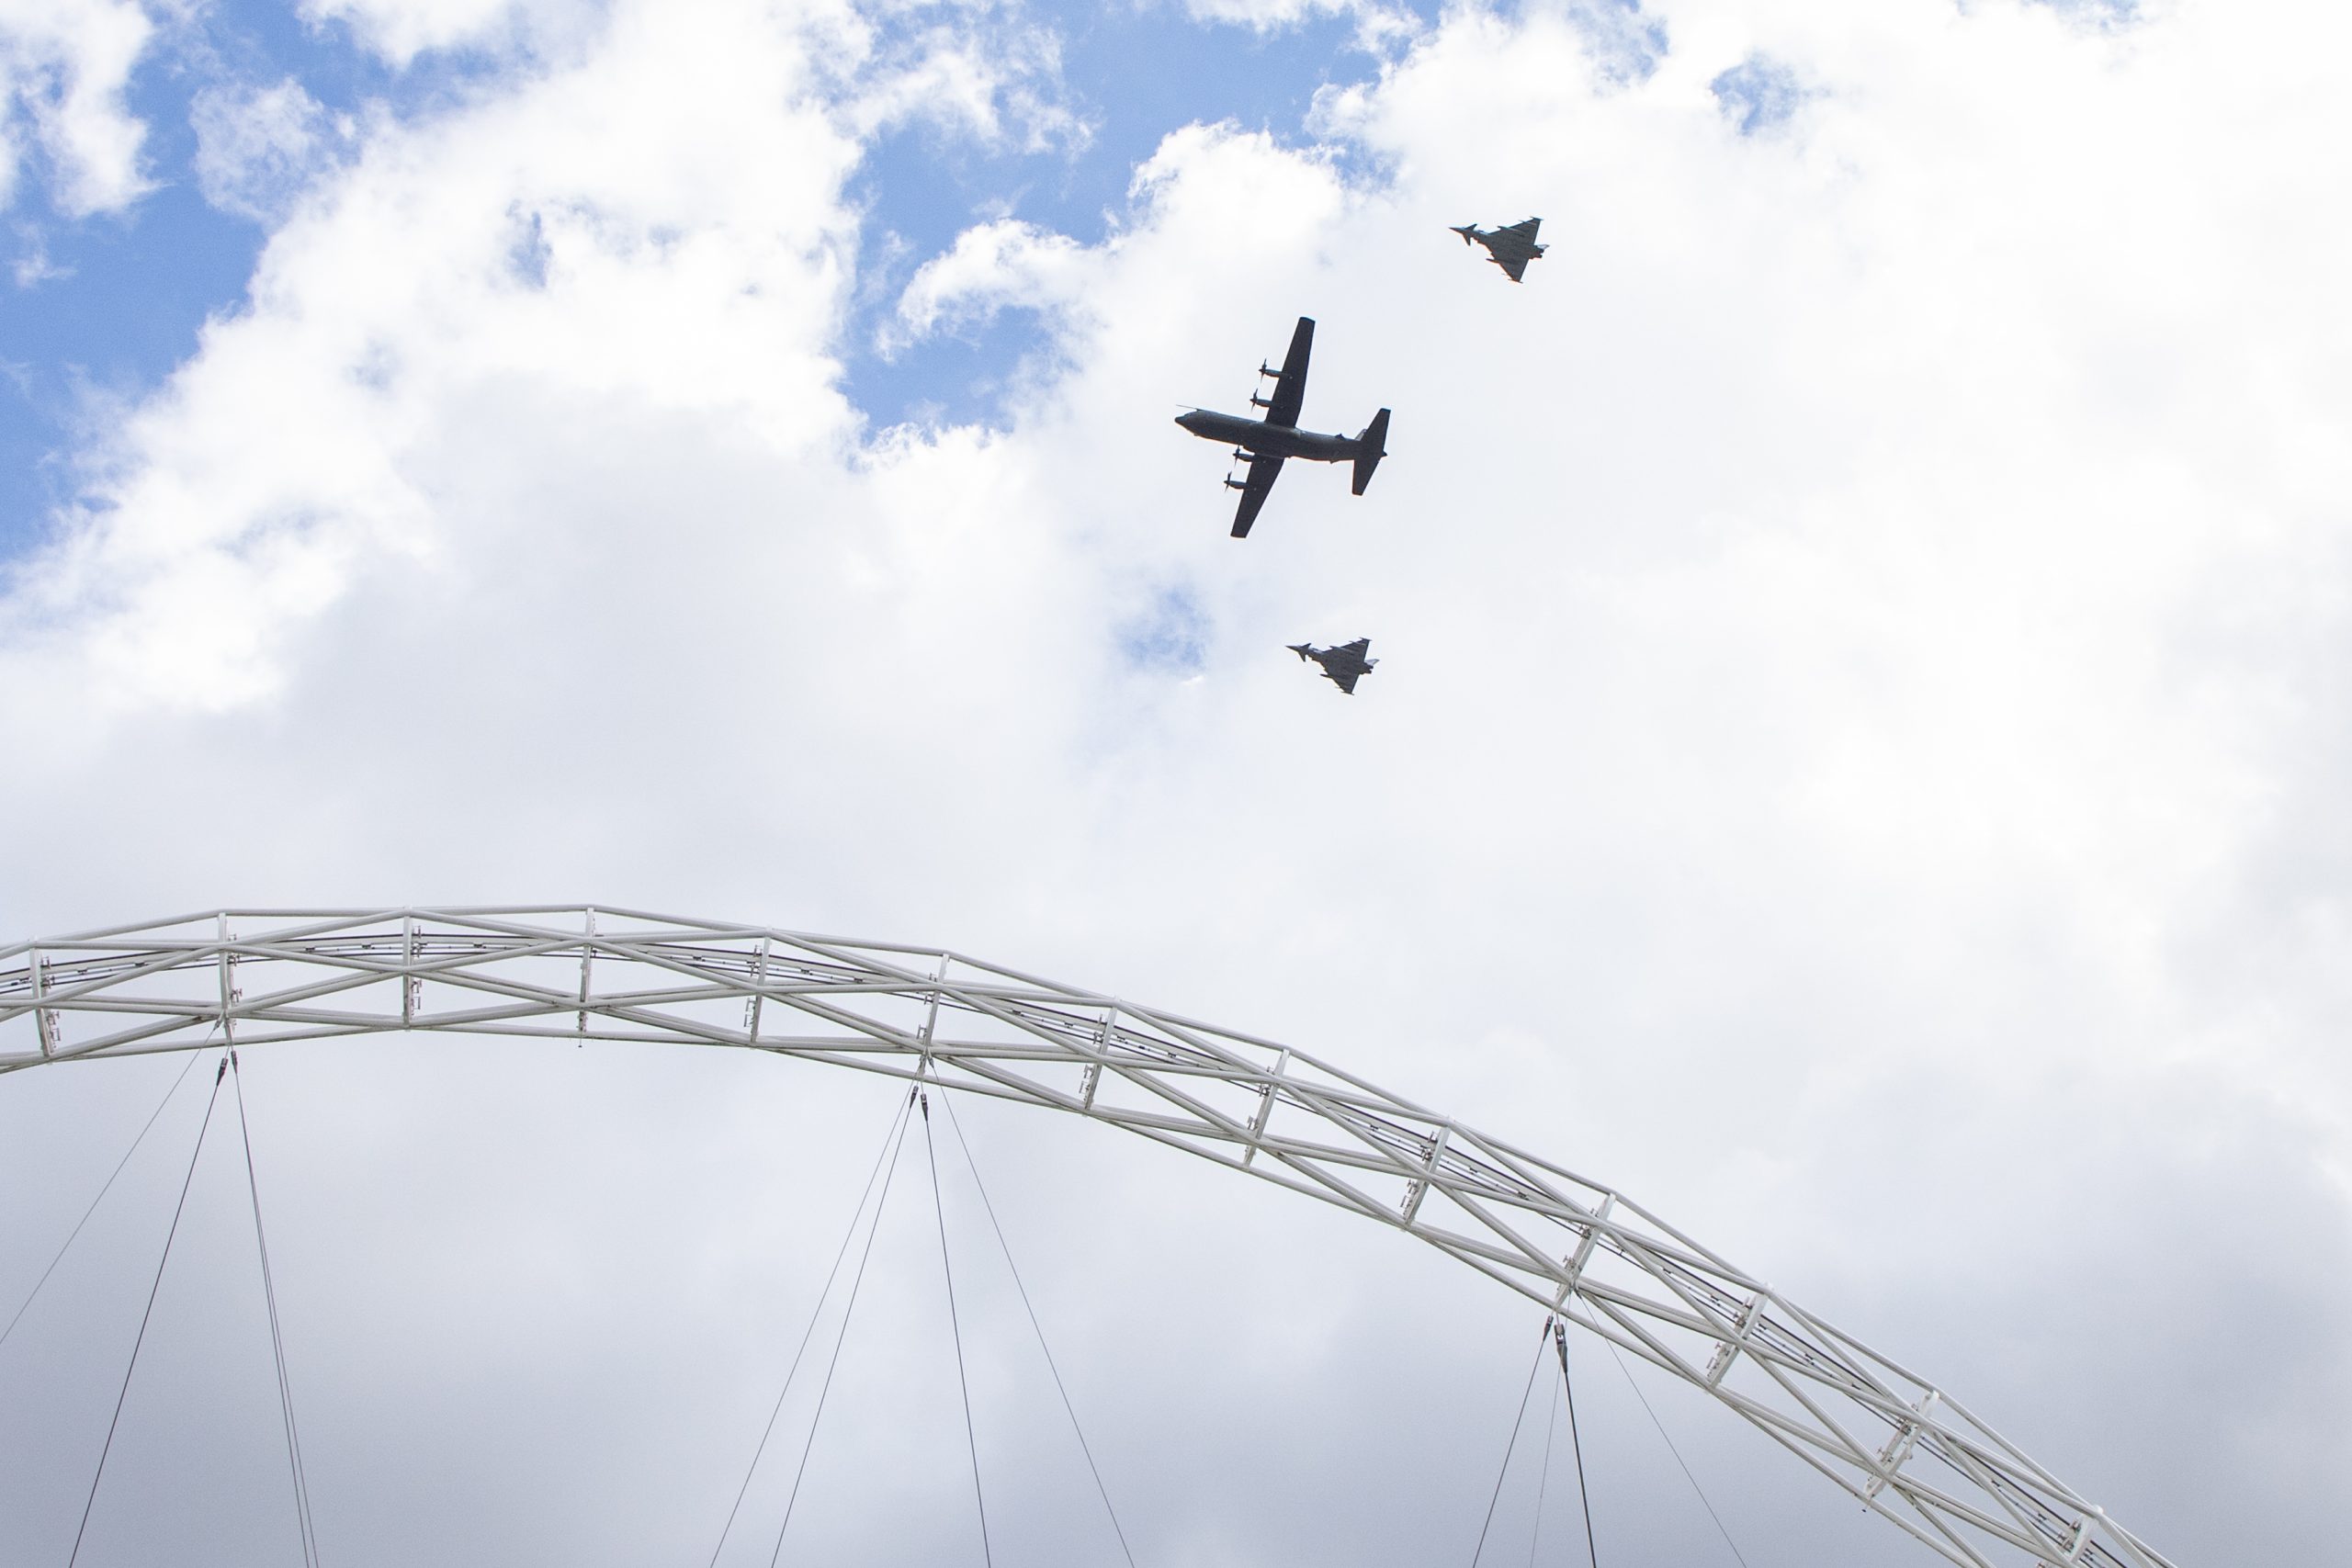 RAF Flypast Over Wembley Stadium For Women’s Euro Football Final